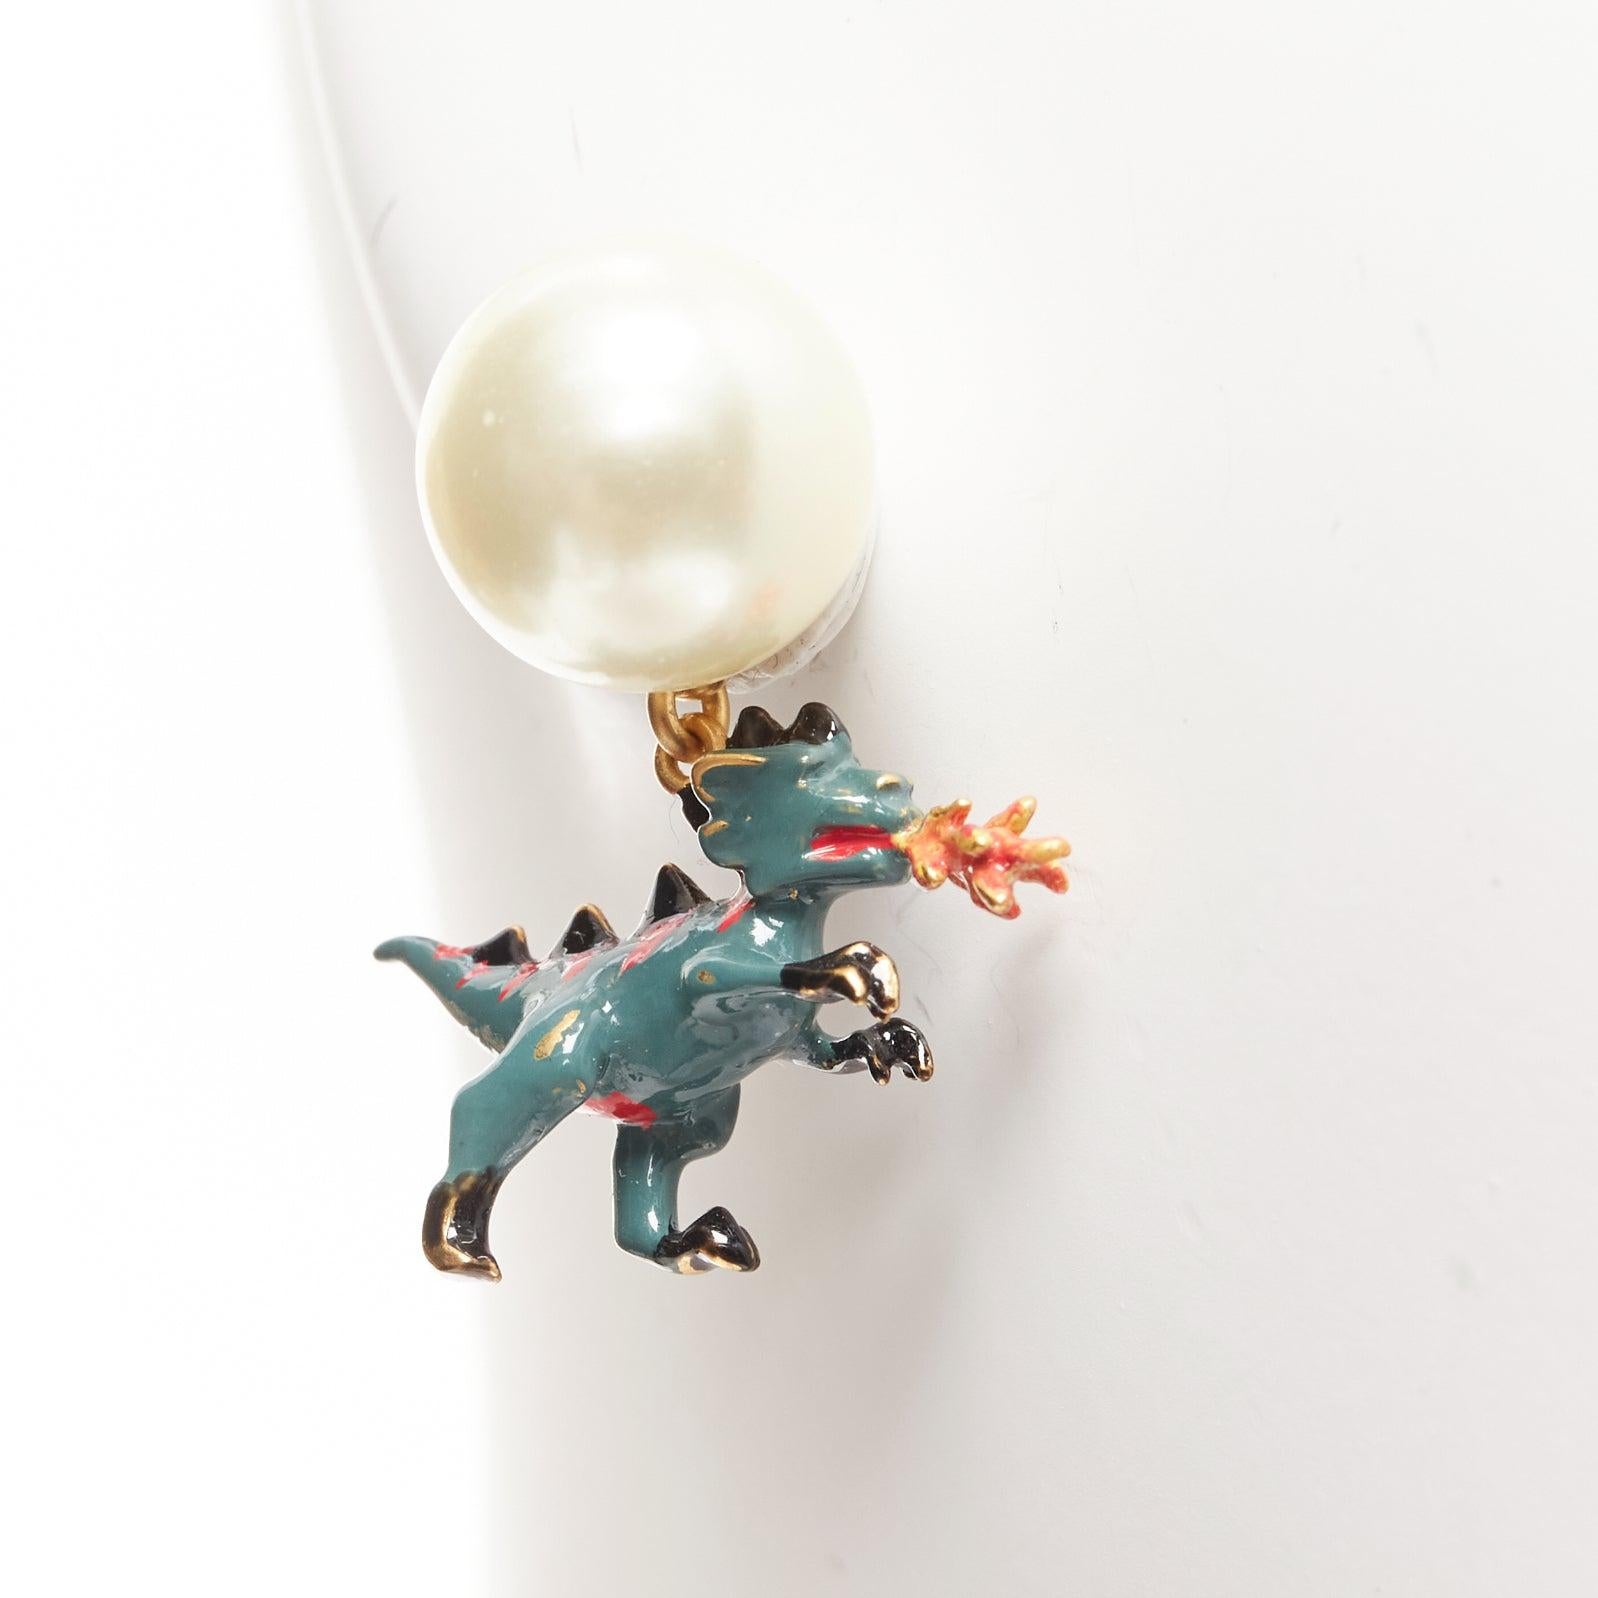 rare DIOR Tribale pearl green dragon dinosaur charm pin earrings pair
Reference: AAWC/A00915
Brand: Dior
Designer: Maria Grazia Chiuri
Material: Metal, Faux Pearl
Color: Pearl, Green
Pattern: Animal Print
Closure: Pin
Lining: Gold